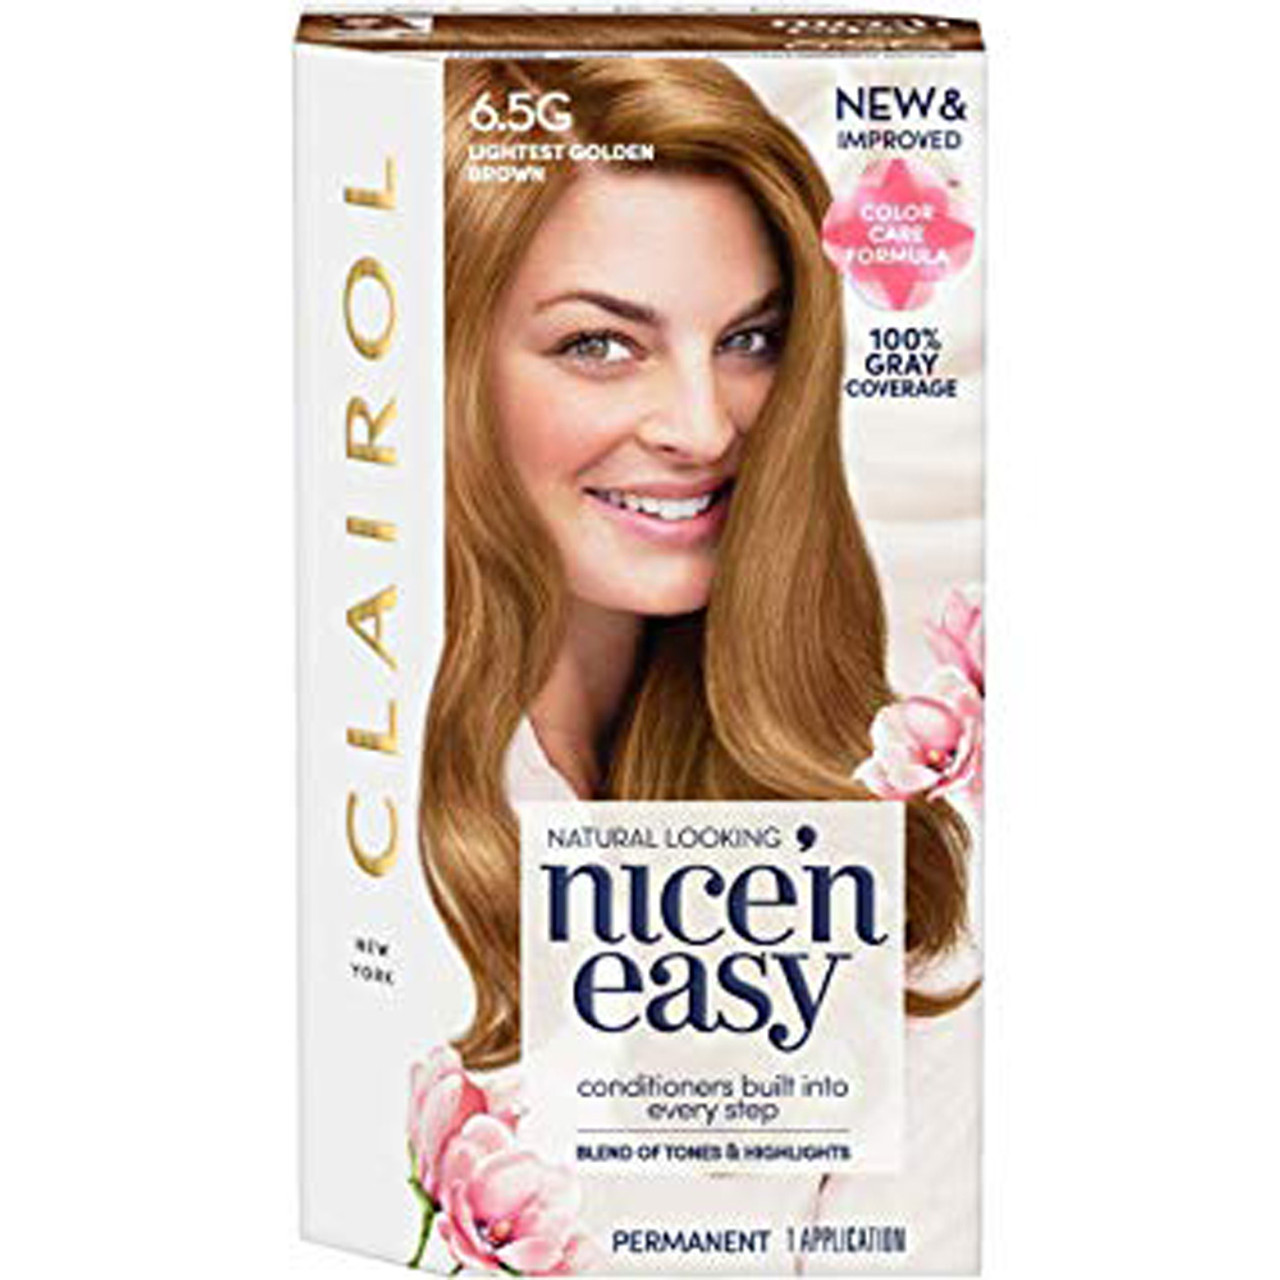 Clairol Nice 'n Easy Hair Color 6.5G Natural Lightest Golden Brown - The  Online Drugstore ©